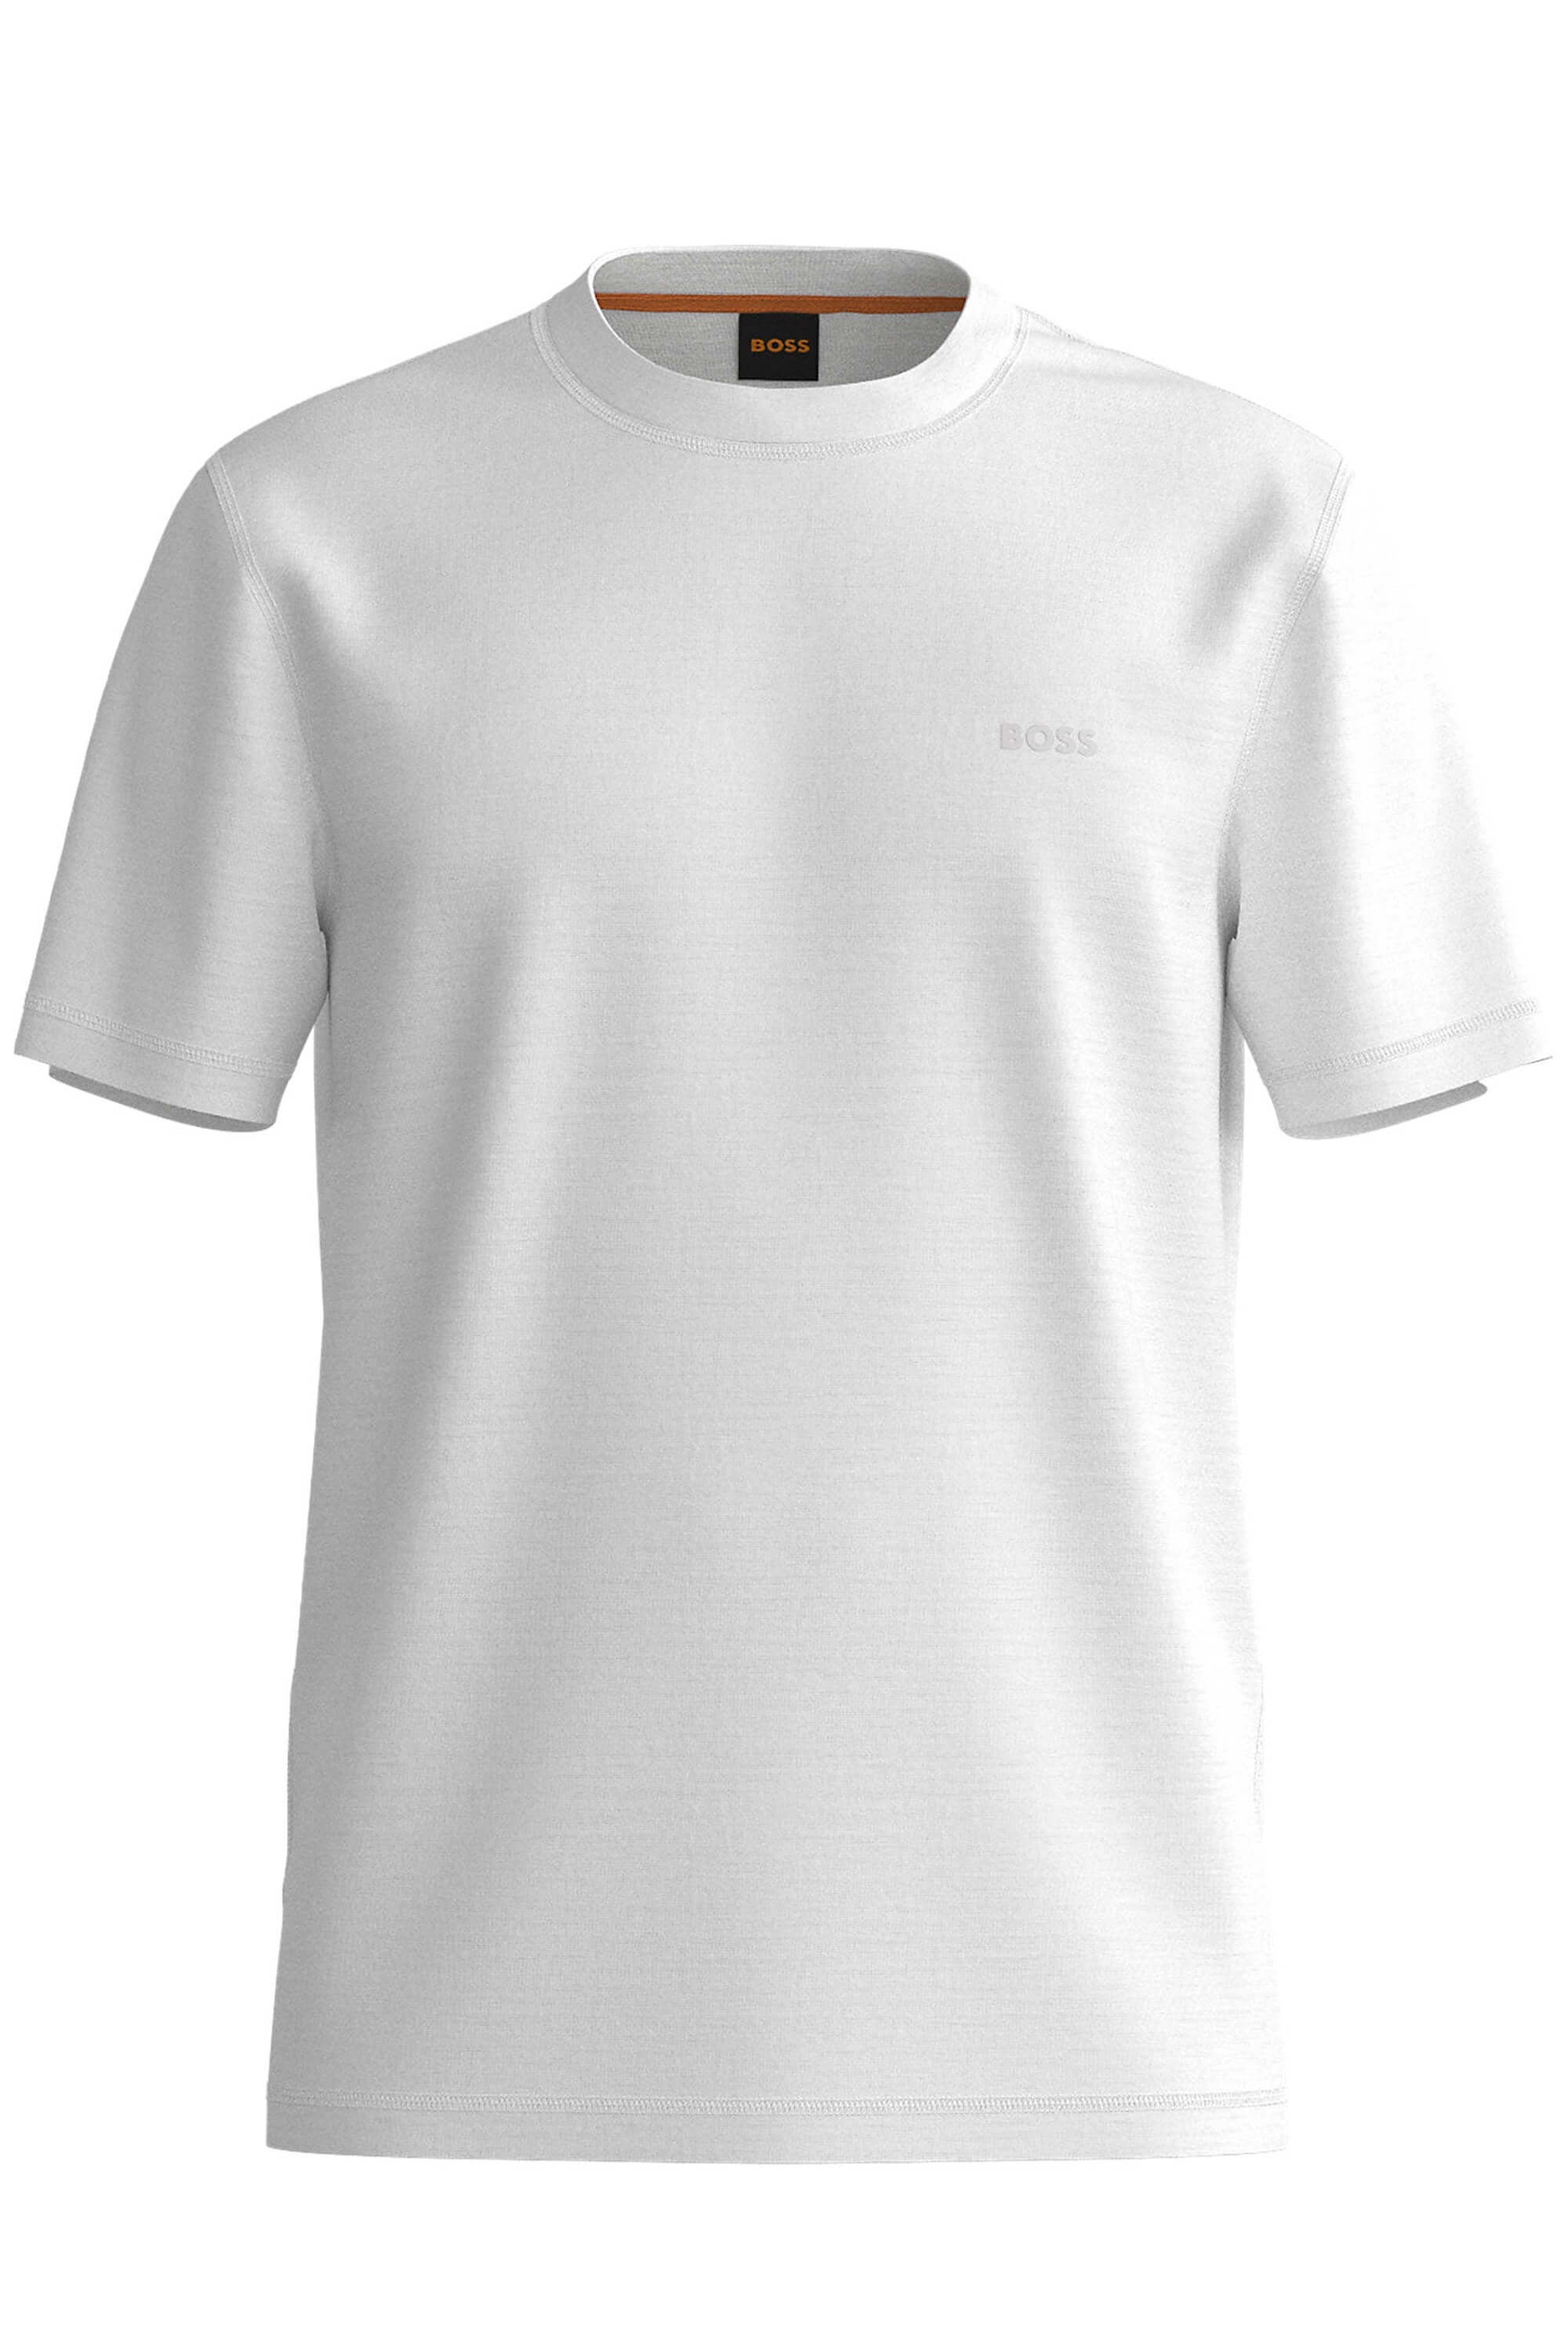 Hugo Boss Te-good T-Shirt White